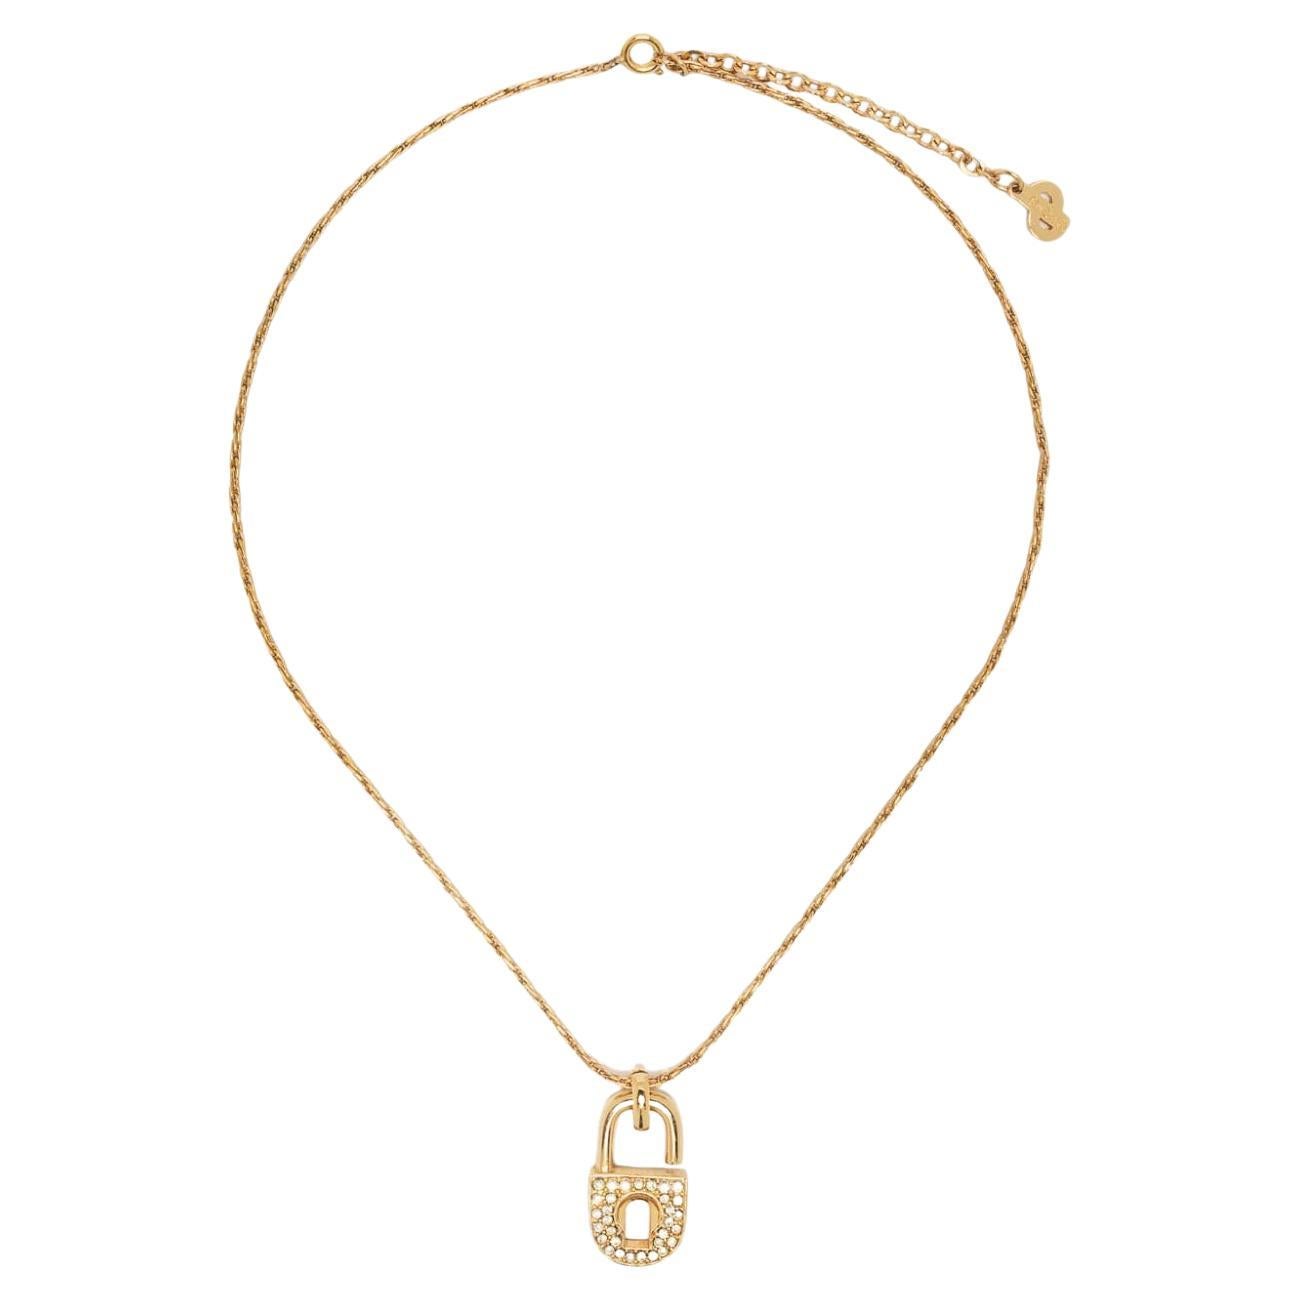 Christian Dior Gold-Tone Padlock Pendant Necklace